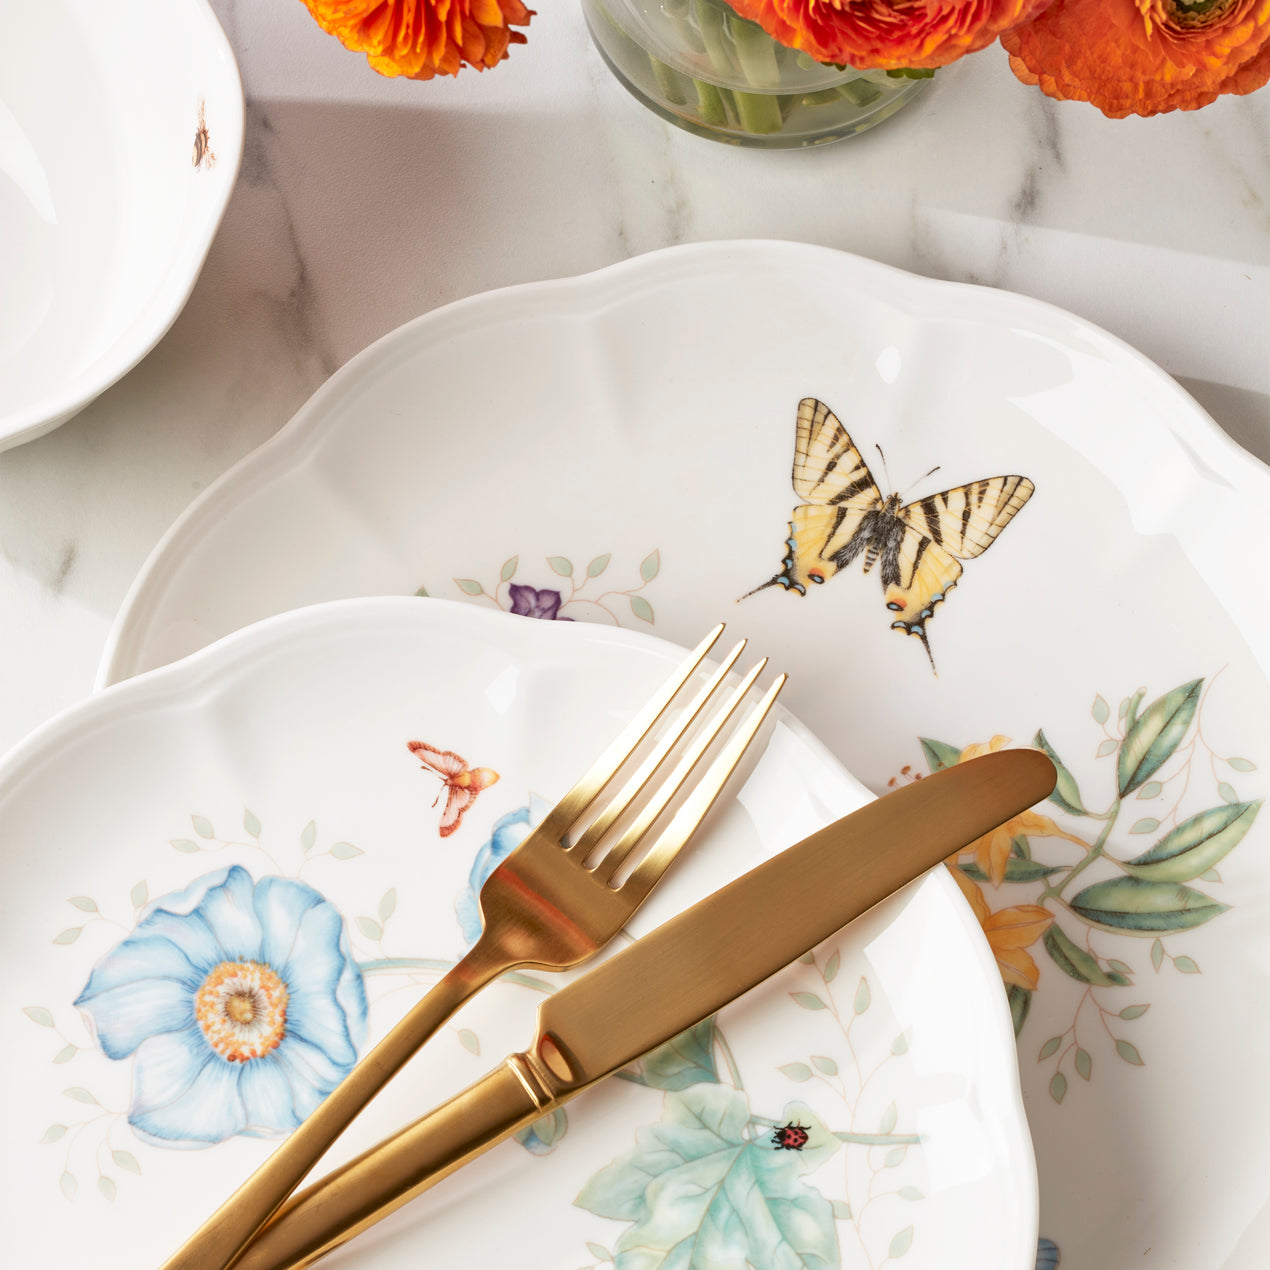 Lenox Butterfly Meadow 18 Piece Dinnerware Set, Service for 6 & Reviews